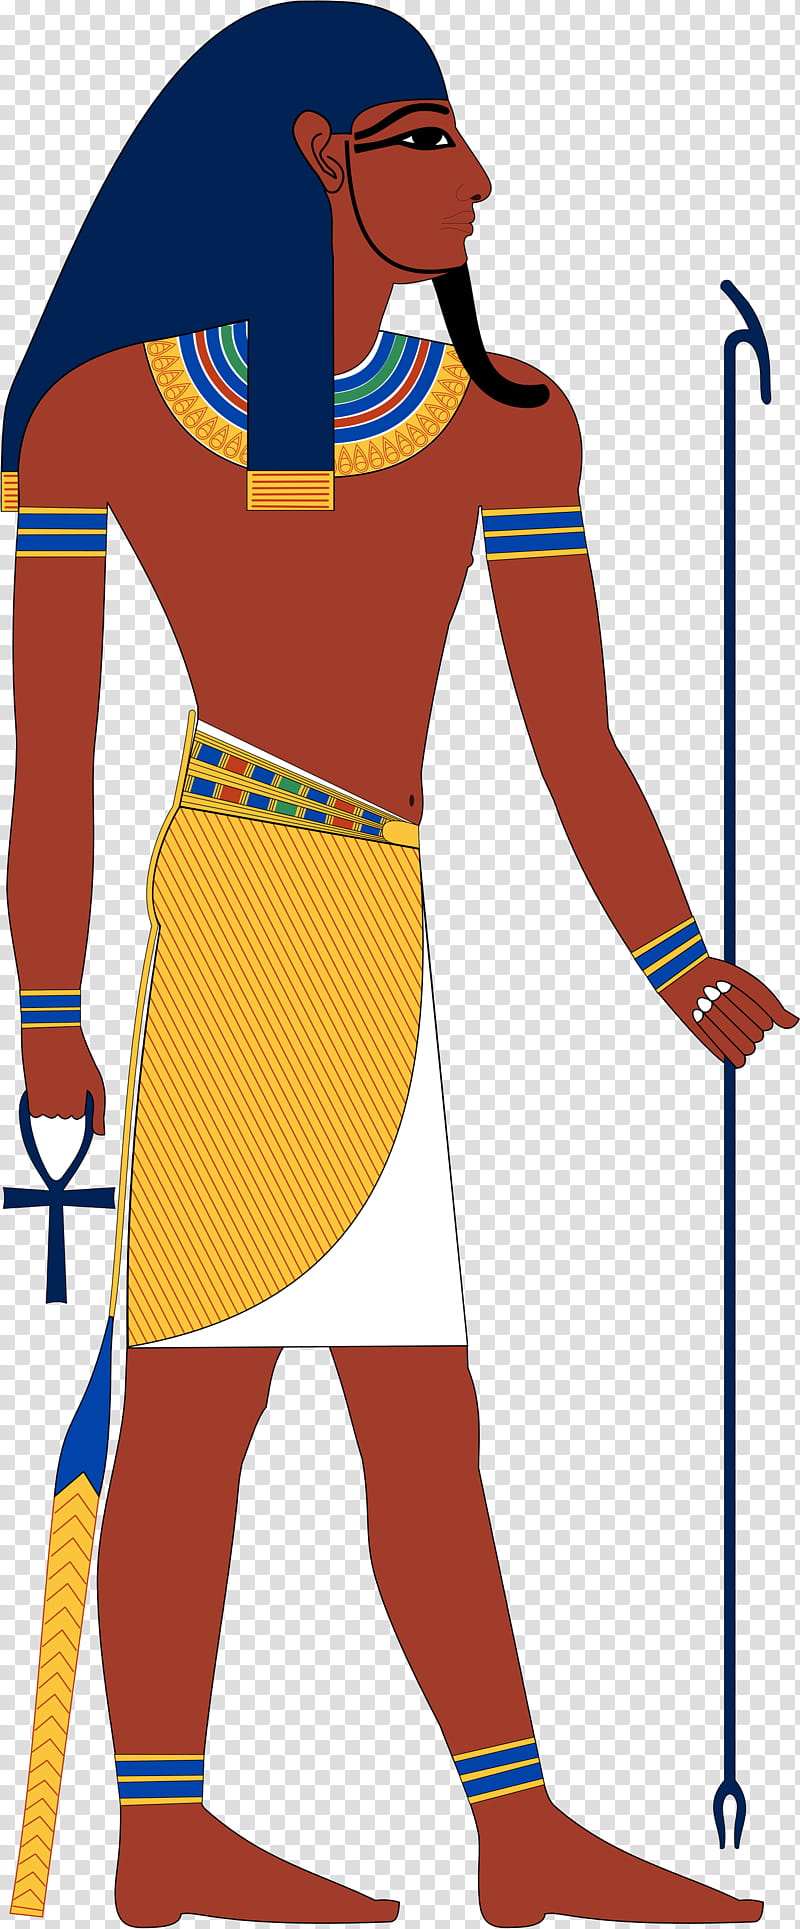 Ancient Egyptian deities Thoth Khnum Ancient Egyptian religion, Ptah, Sobek, Deity, Egyptian Mythology, Goddess, Ra, Creator Deity transparent background PNG clipart